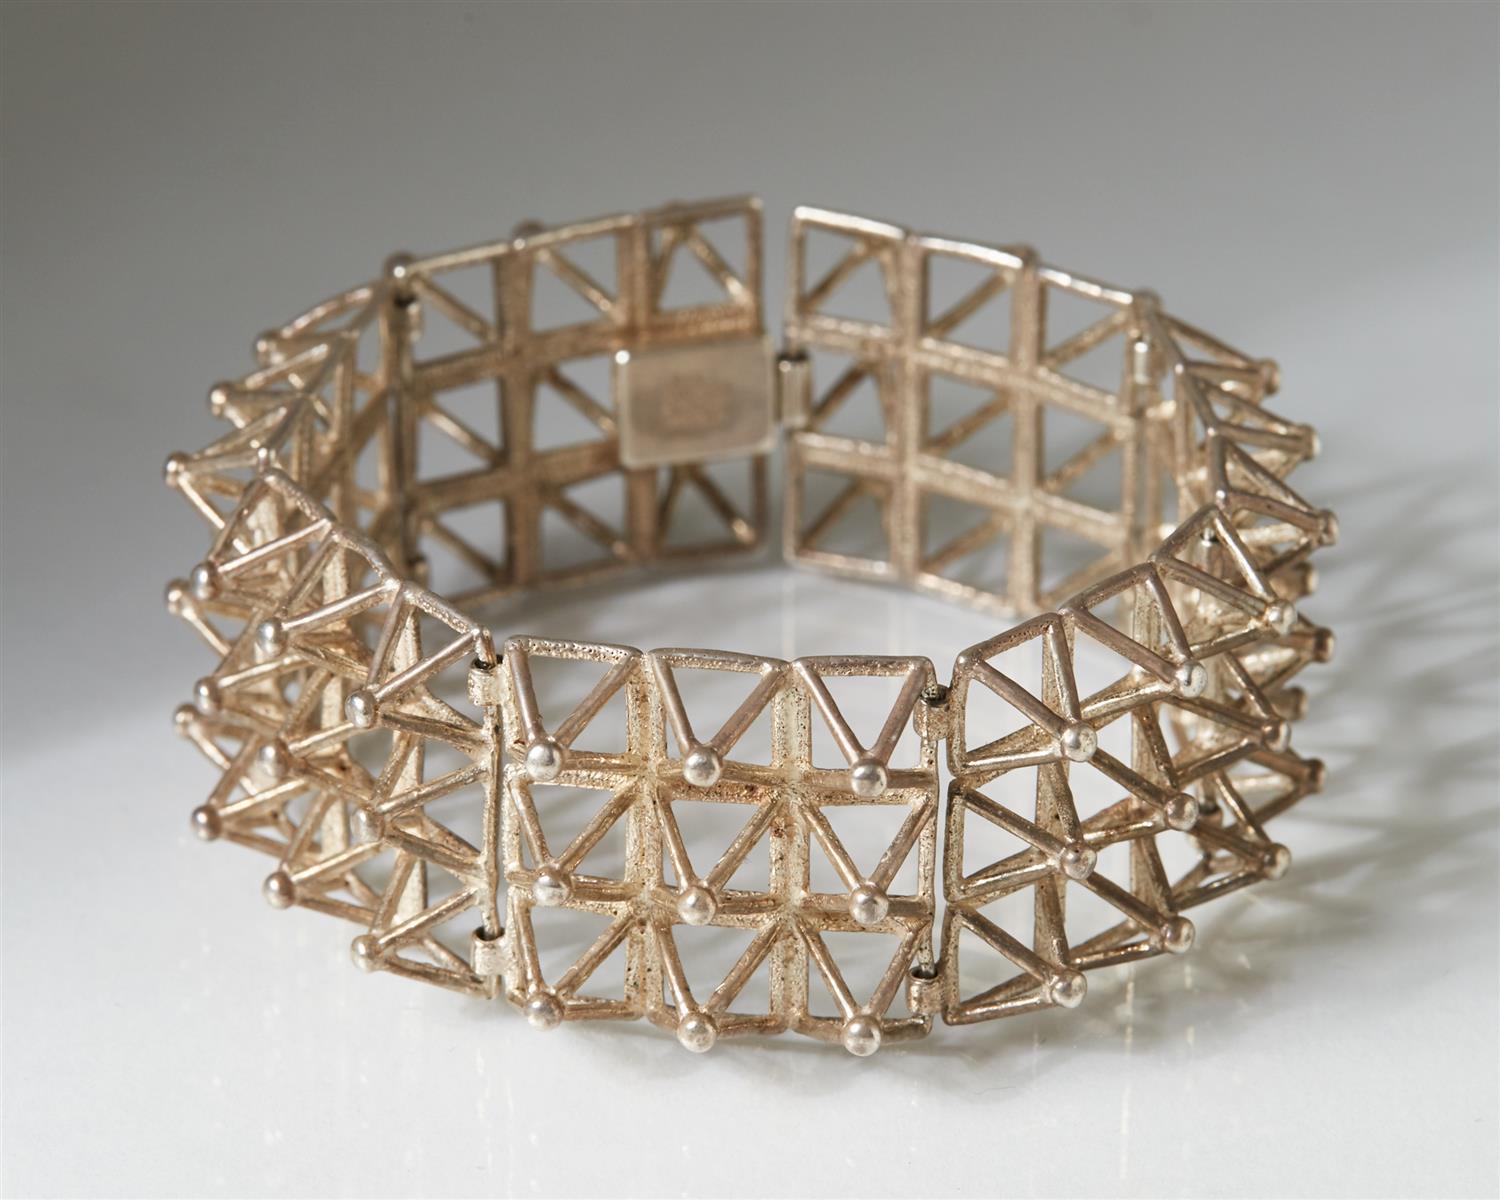 Bracelet designed by Nils Erik From, — Modernity